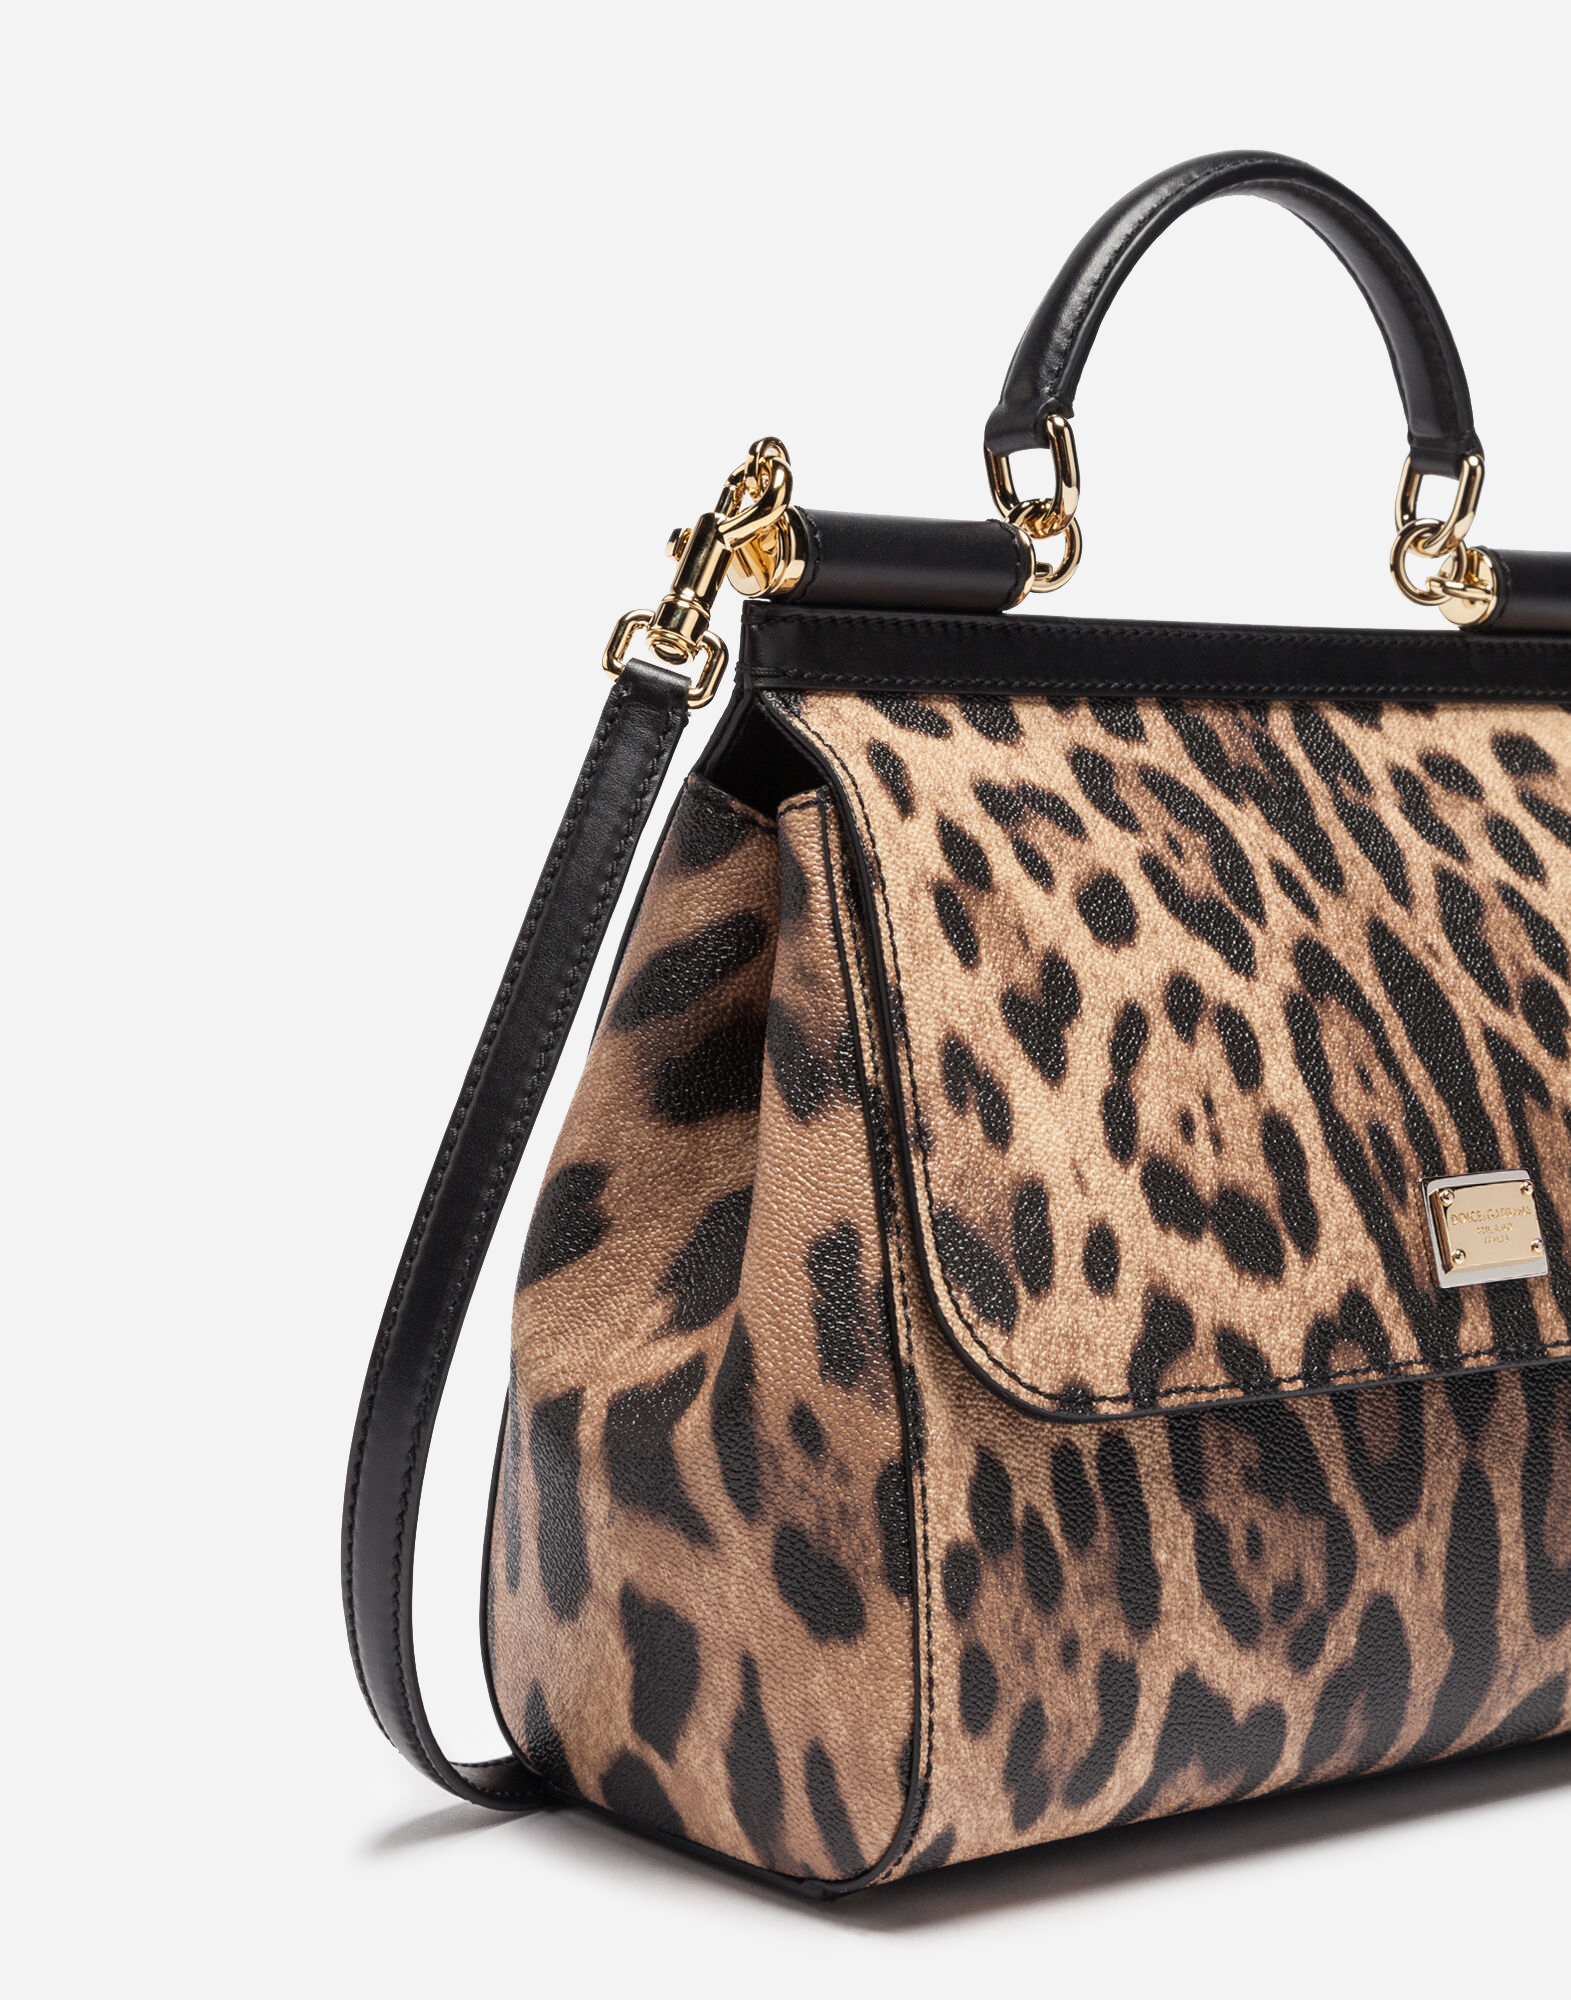 dolce & gabbana leopard handbags